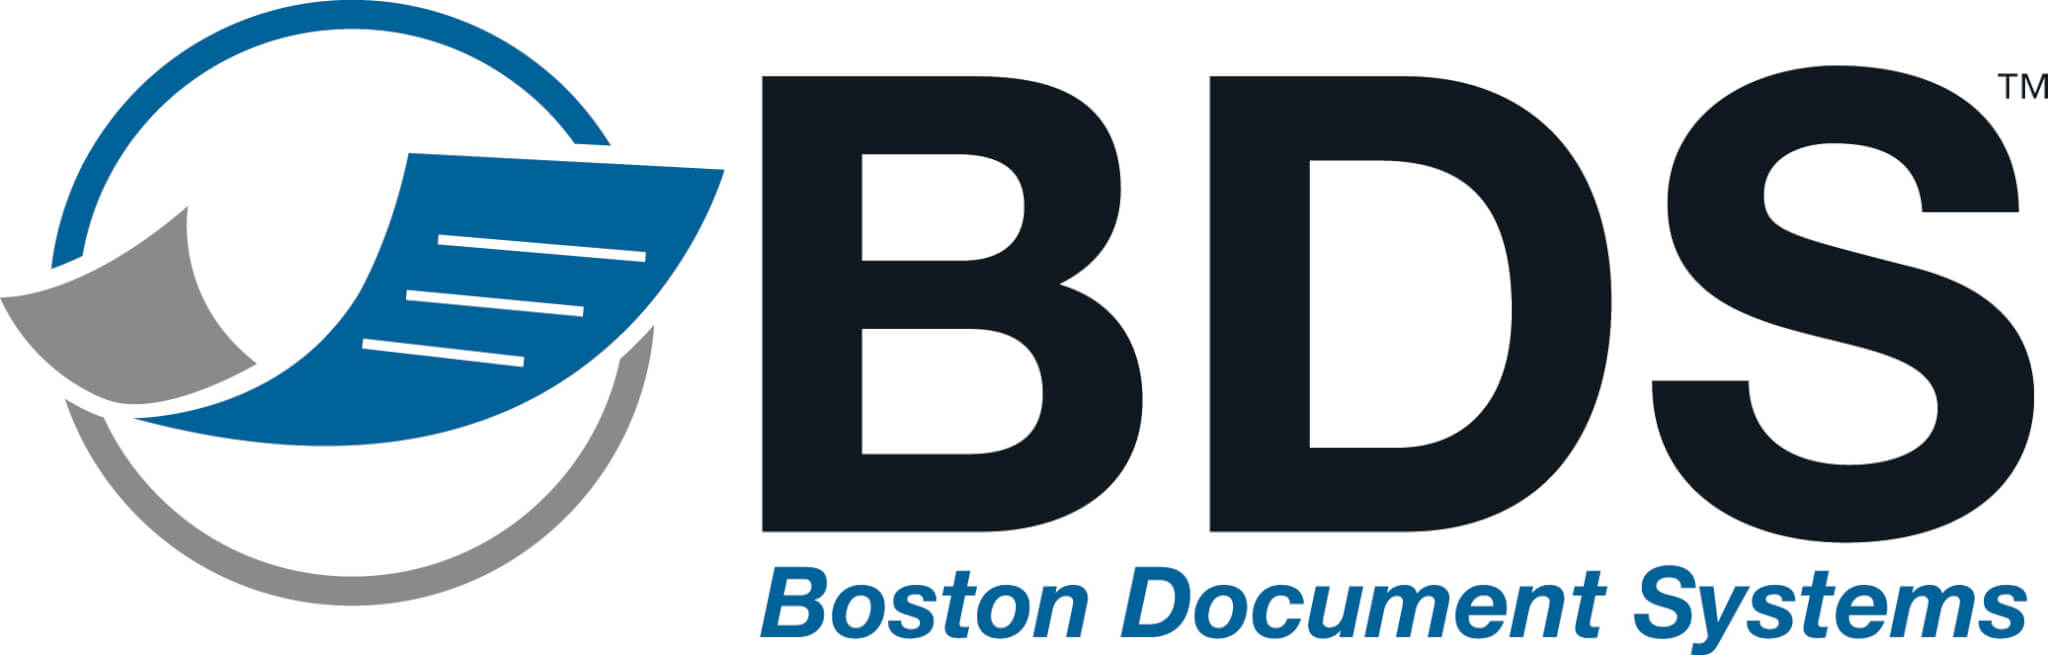 Boston Document Systems logo